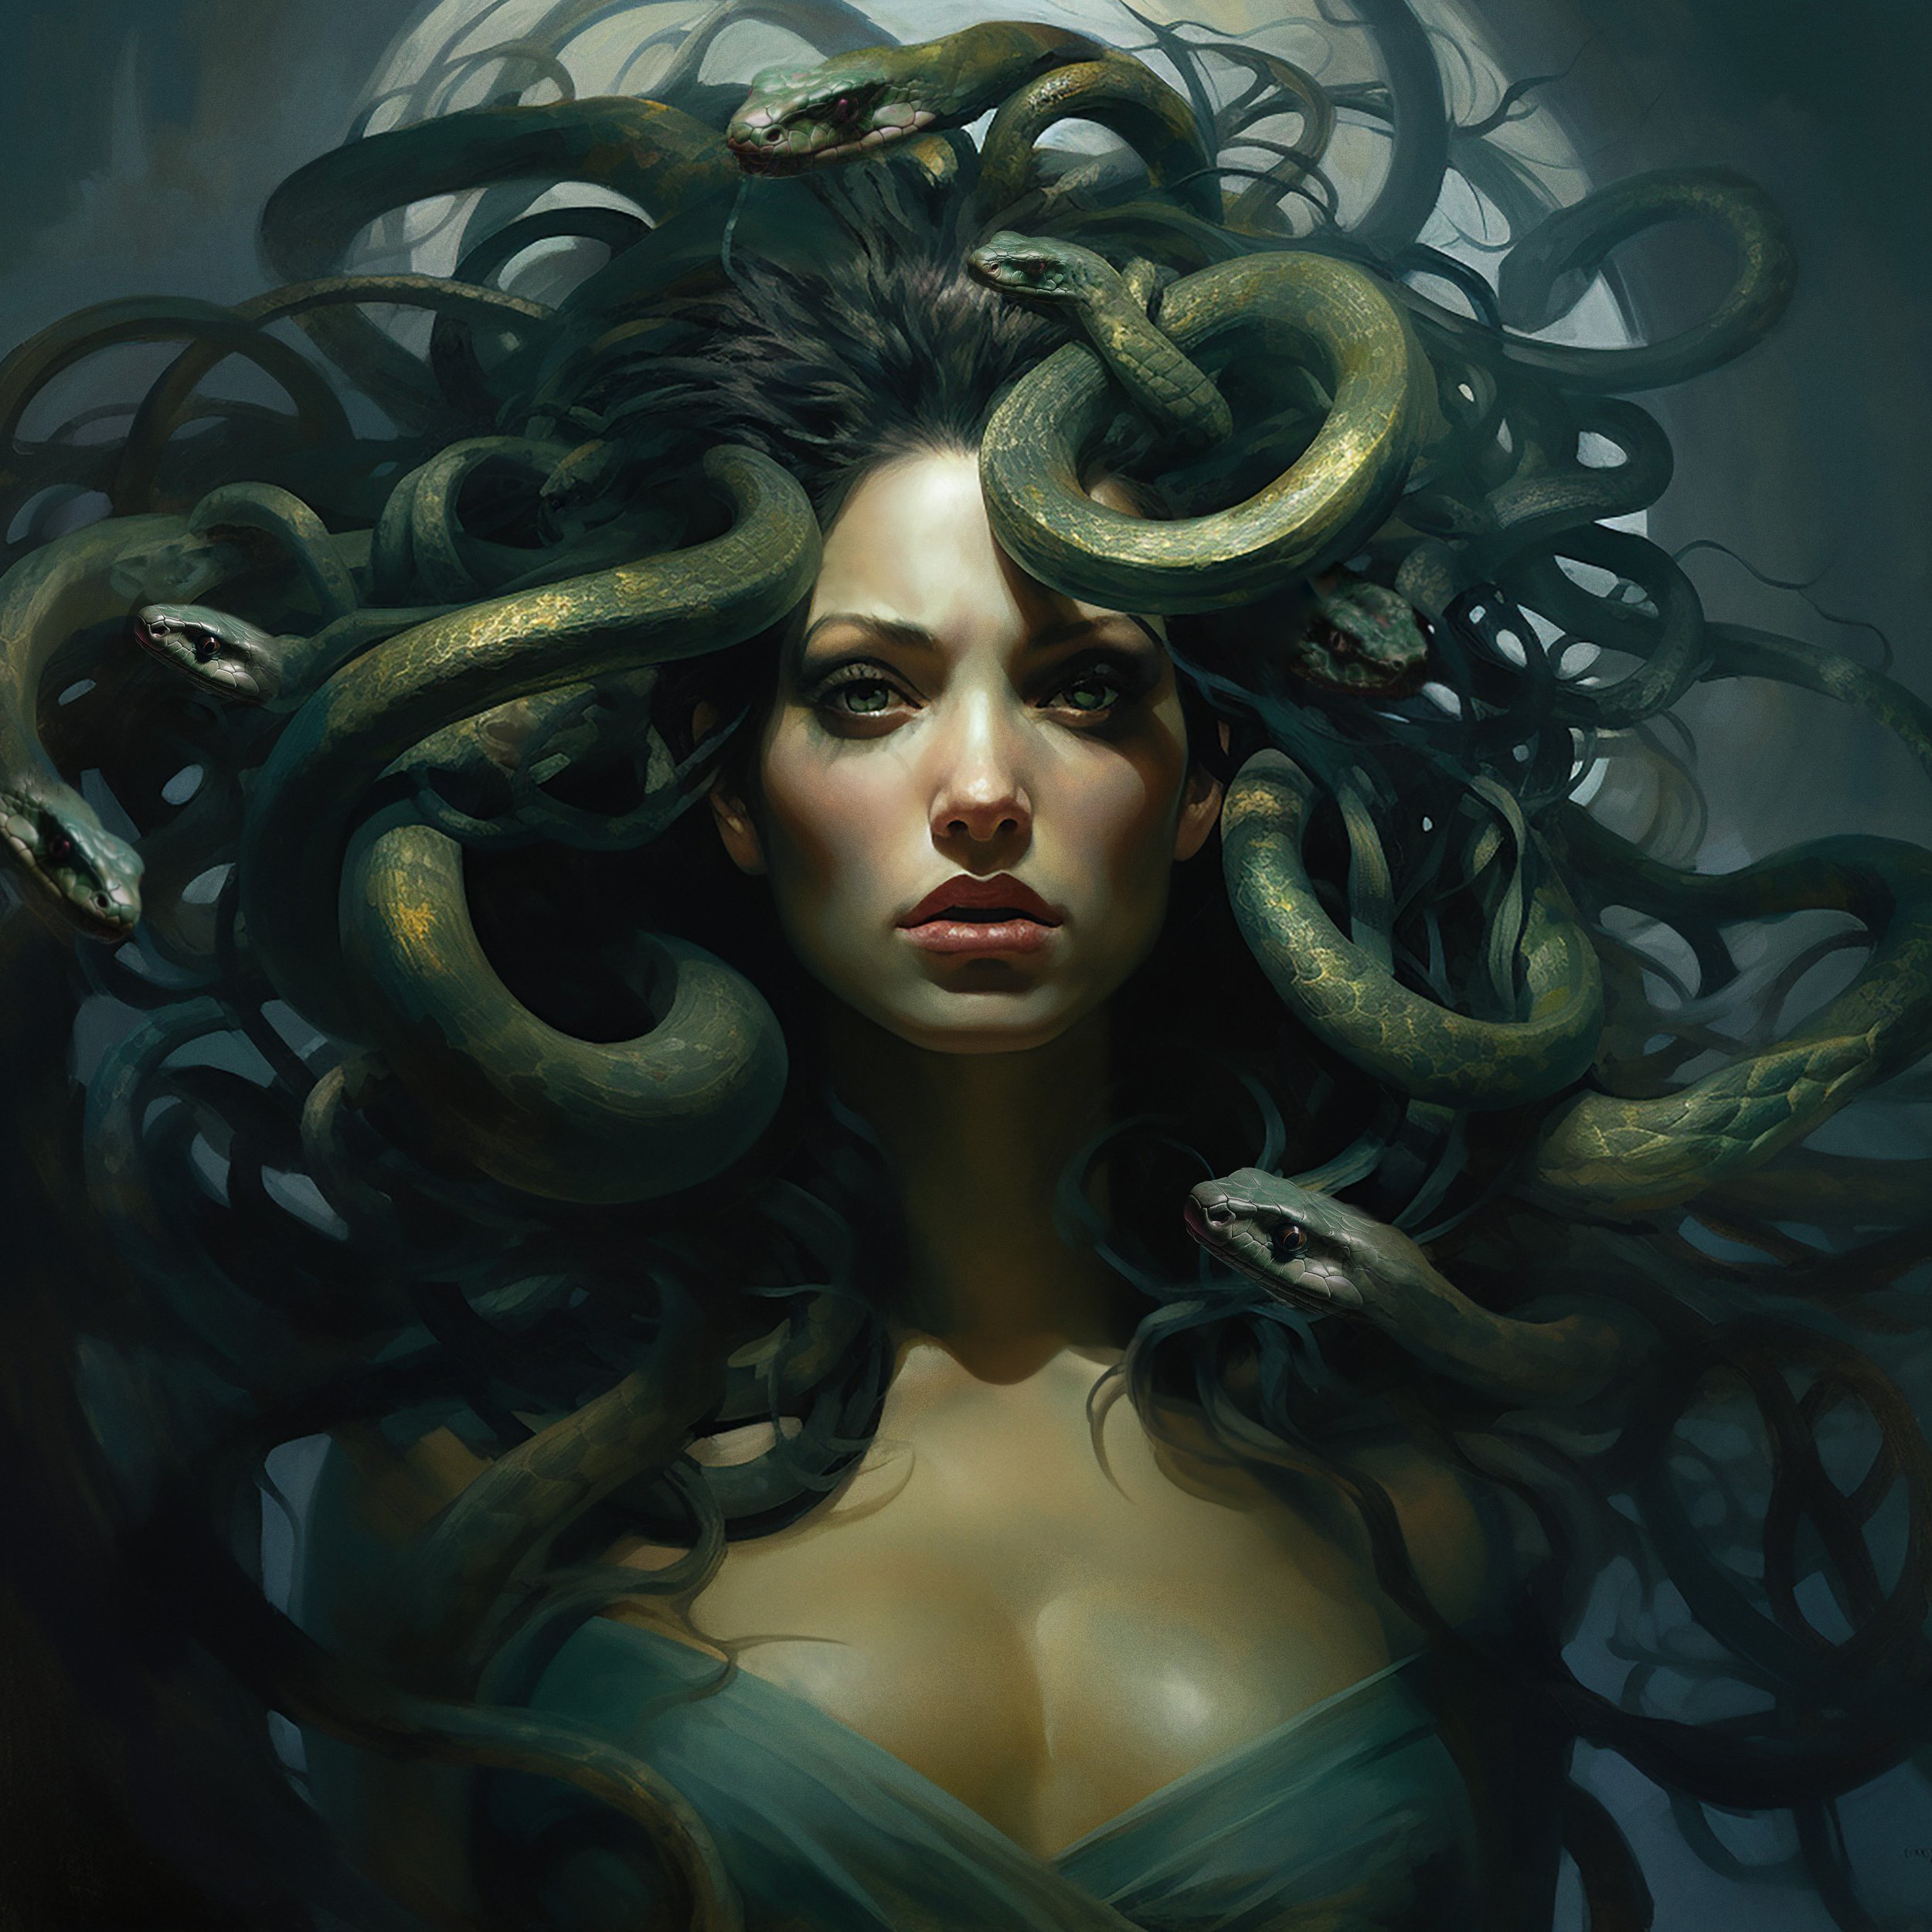 Medusa: Greek Mythology and Symbolism of Women's Empowerment